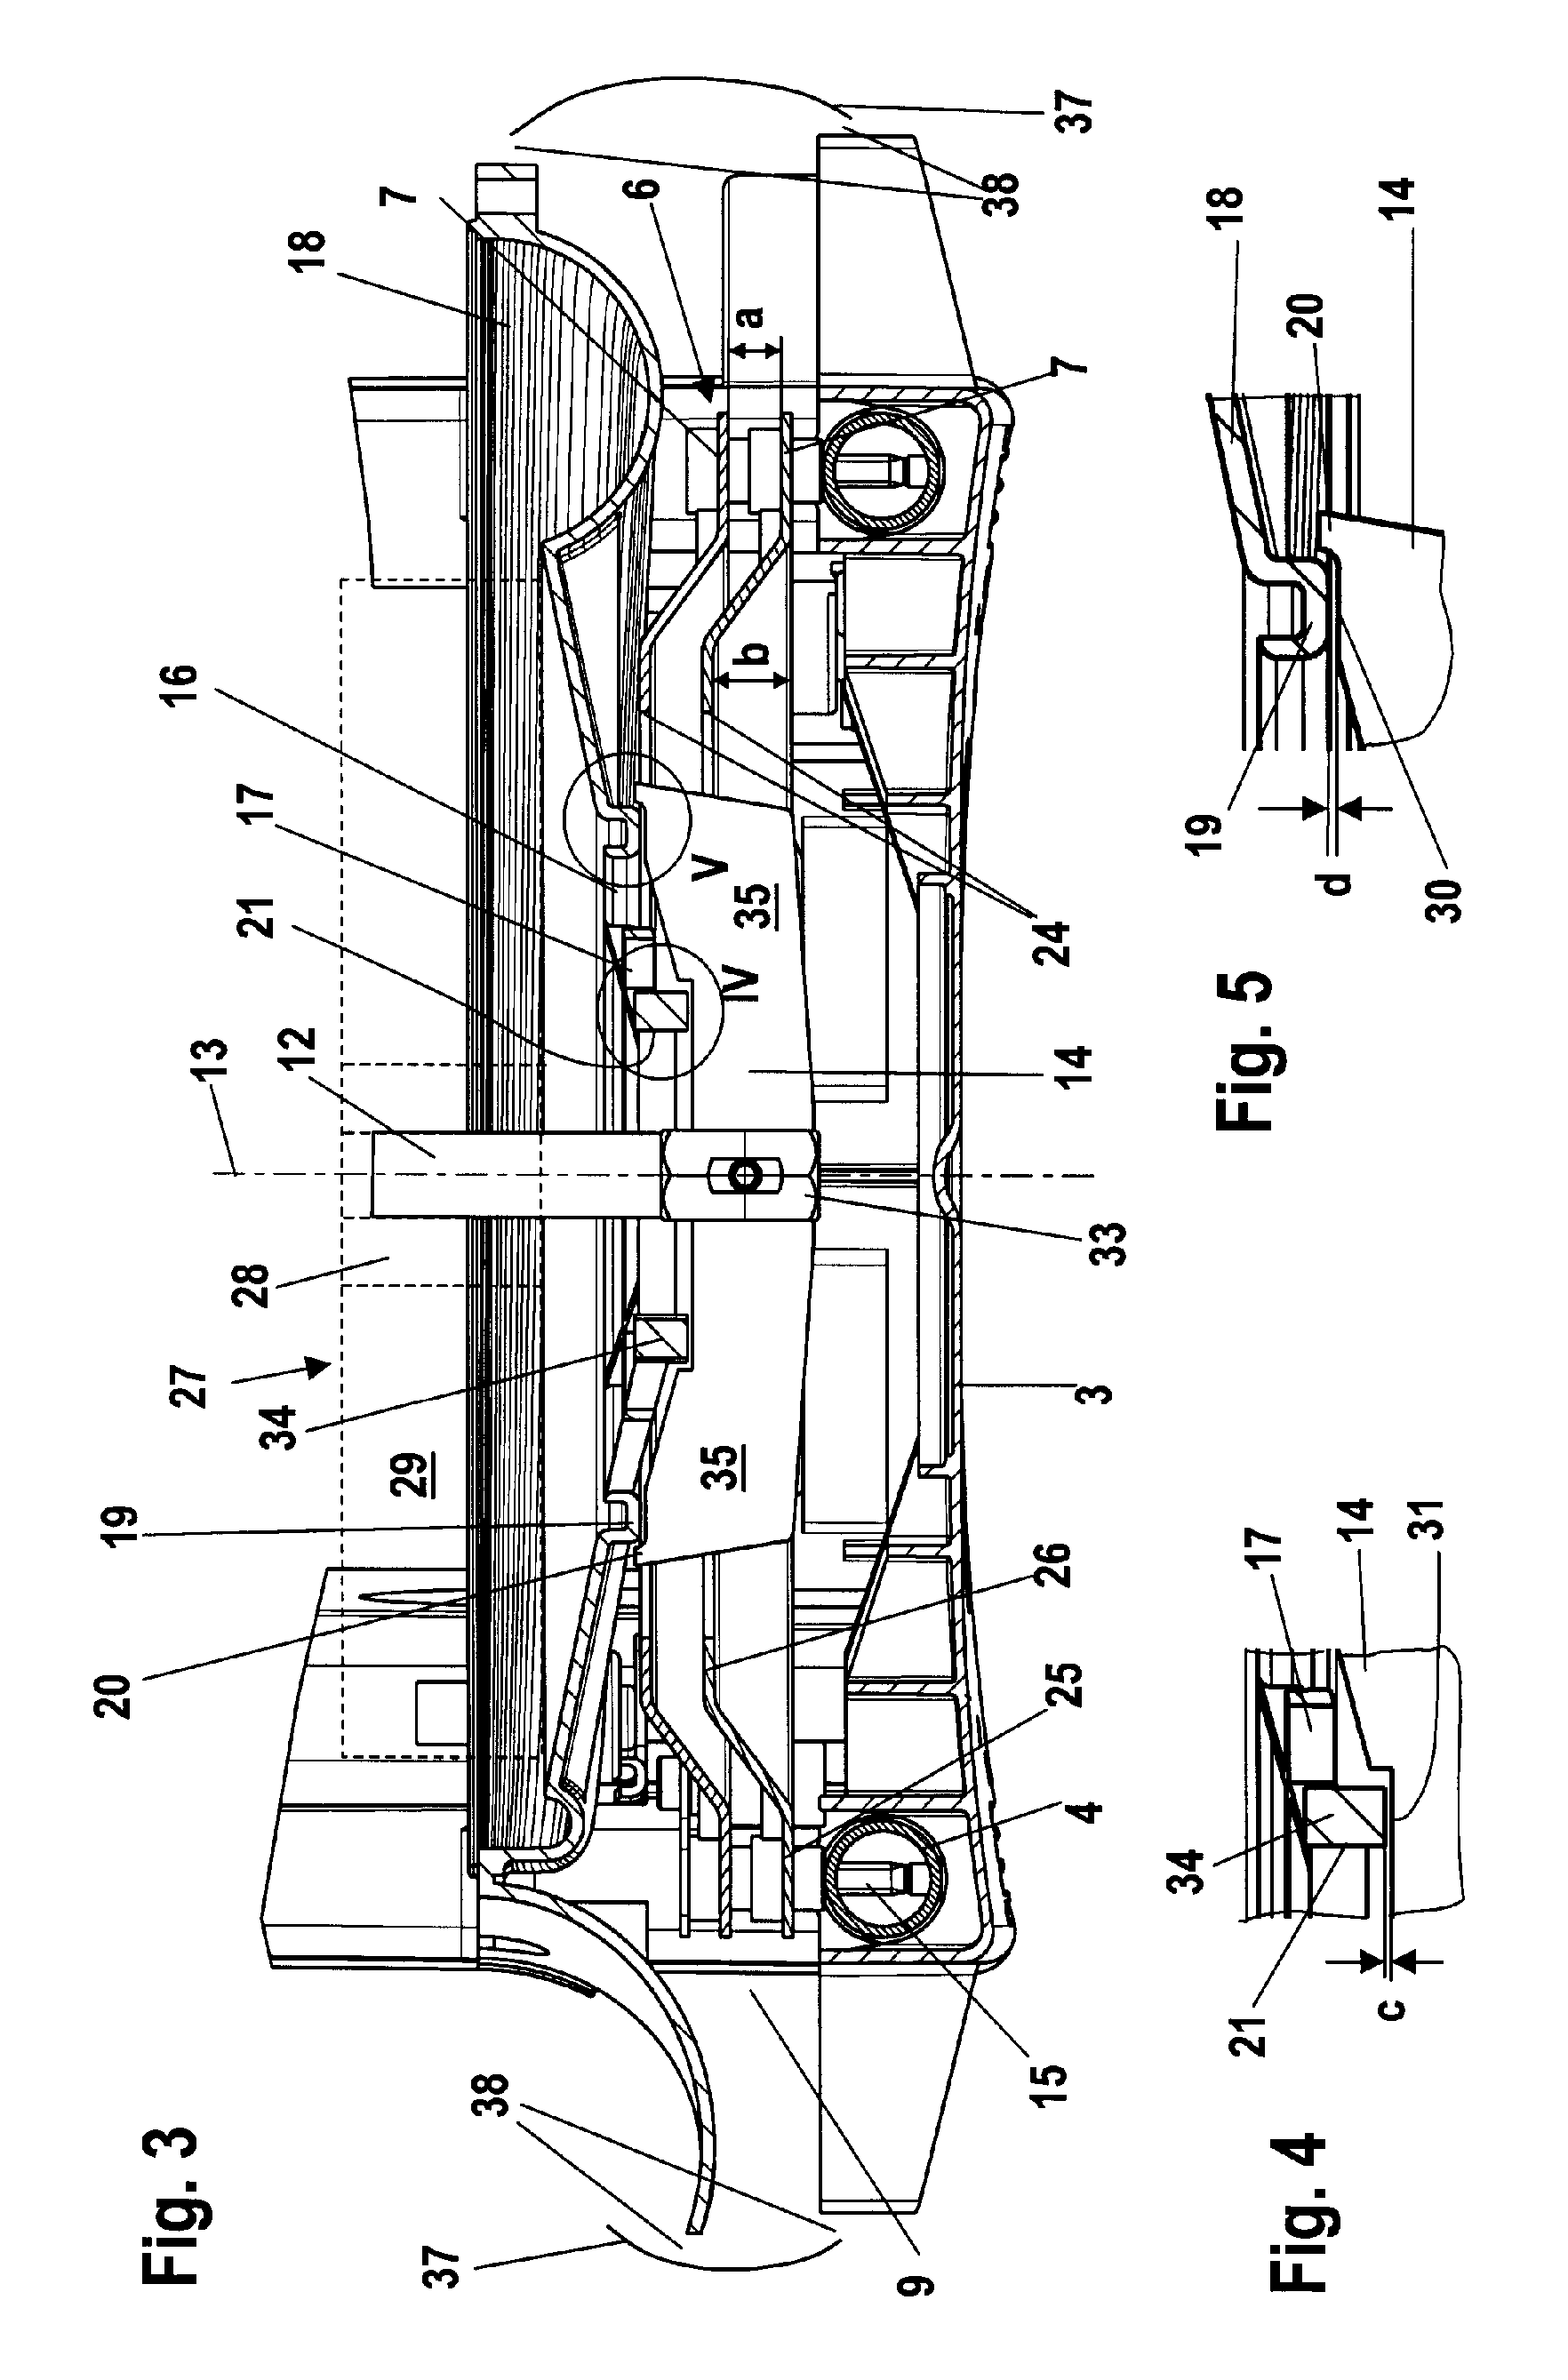 Blower apparatus